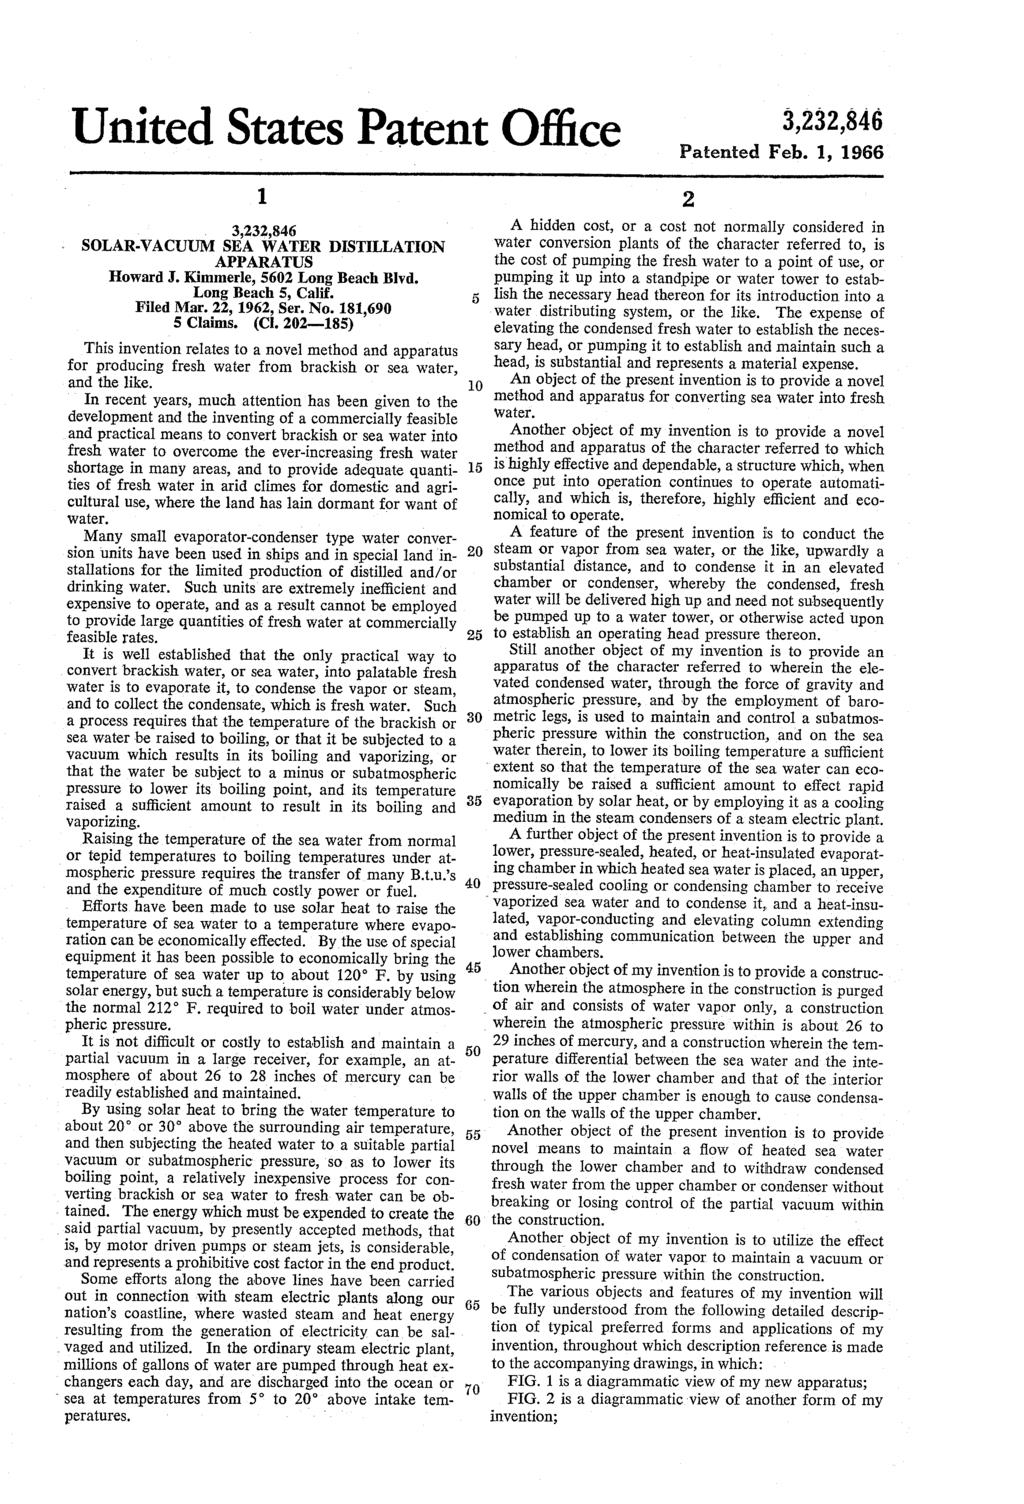 United States Patent Office Patented Feb. 1, 1966 1. SOLAR-VACUUM SEA WATER DISTILLATION APPARATUS Howard J. Kimmerle, 60 Long Beach Blvd. Long Beach, Calif. Filed Mar., 196, Ser. No. 181,690 Claims.